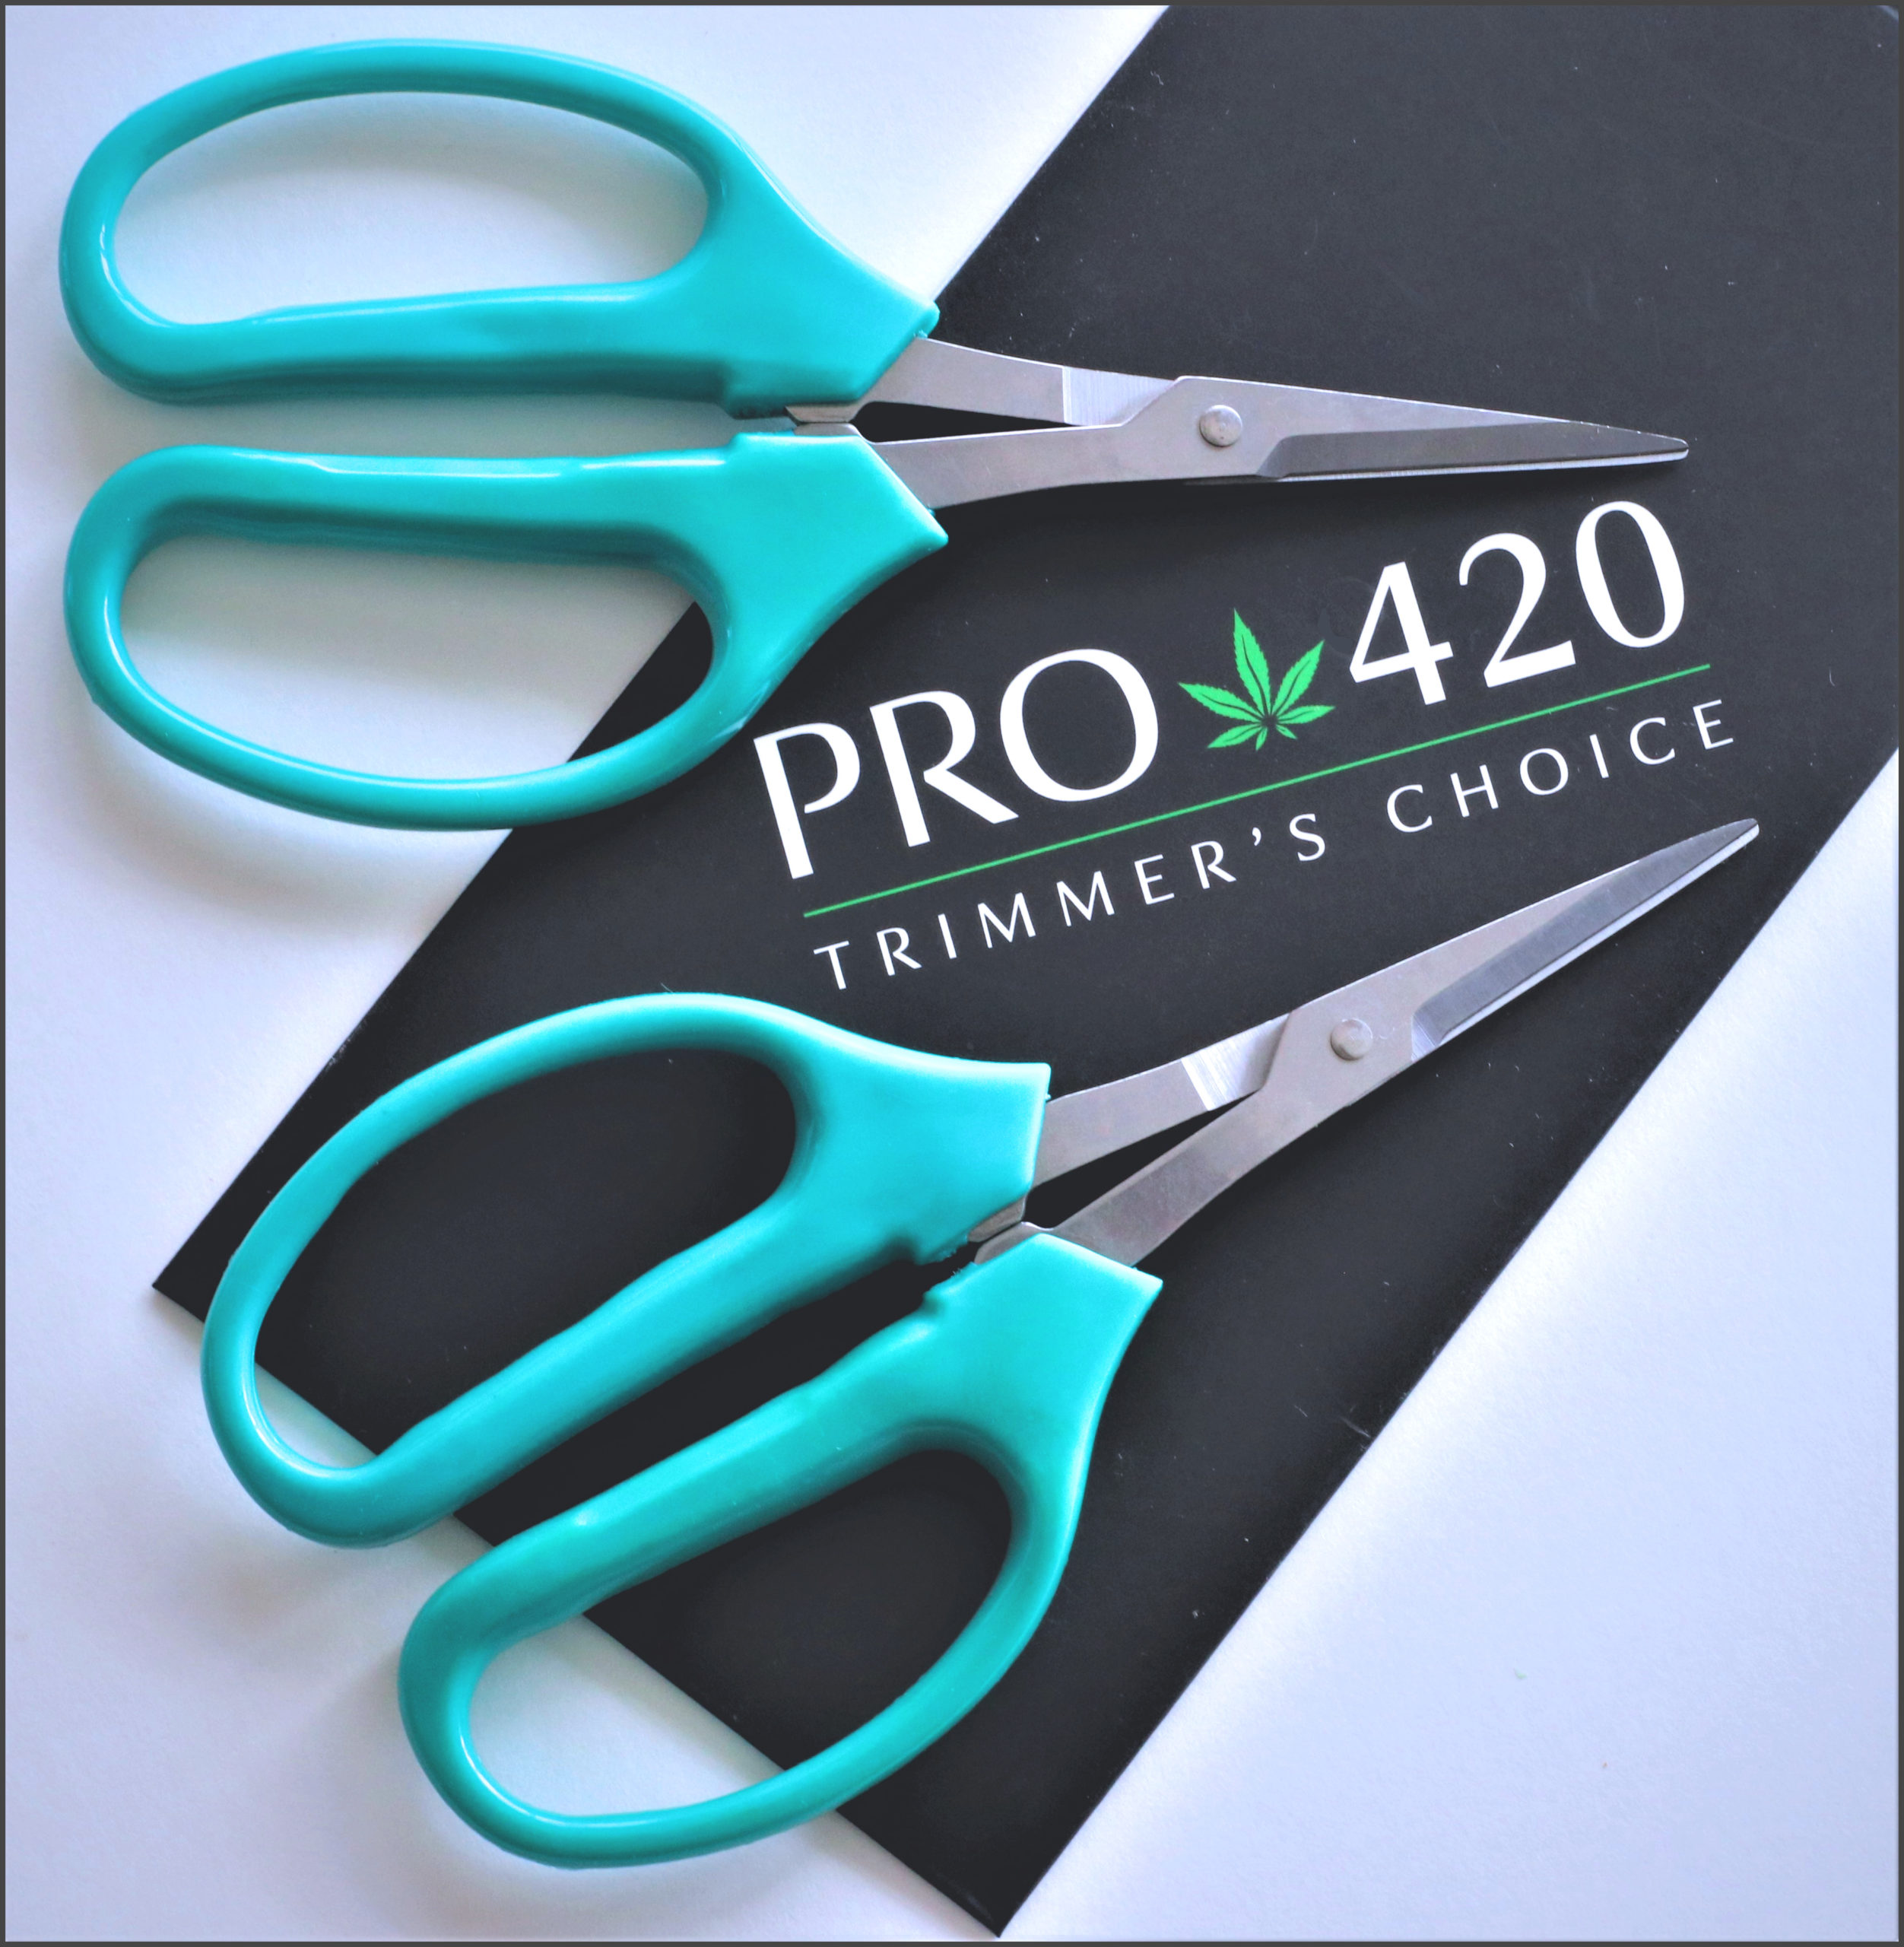 PRO 42O Scissors PRO 420 Scissors - PRO 420 Trimmer's Choice